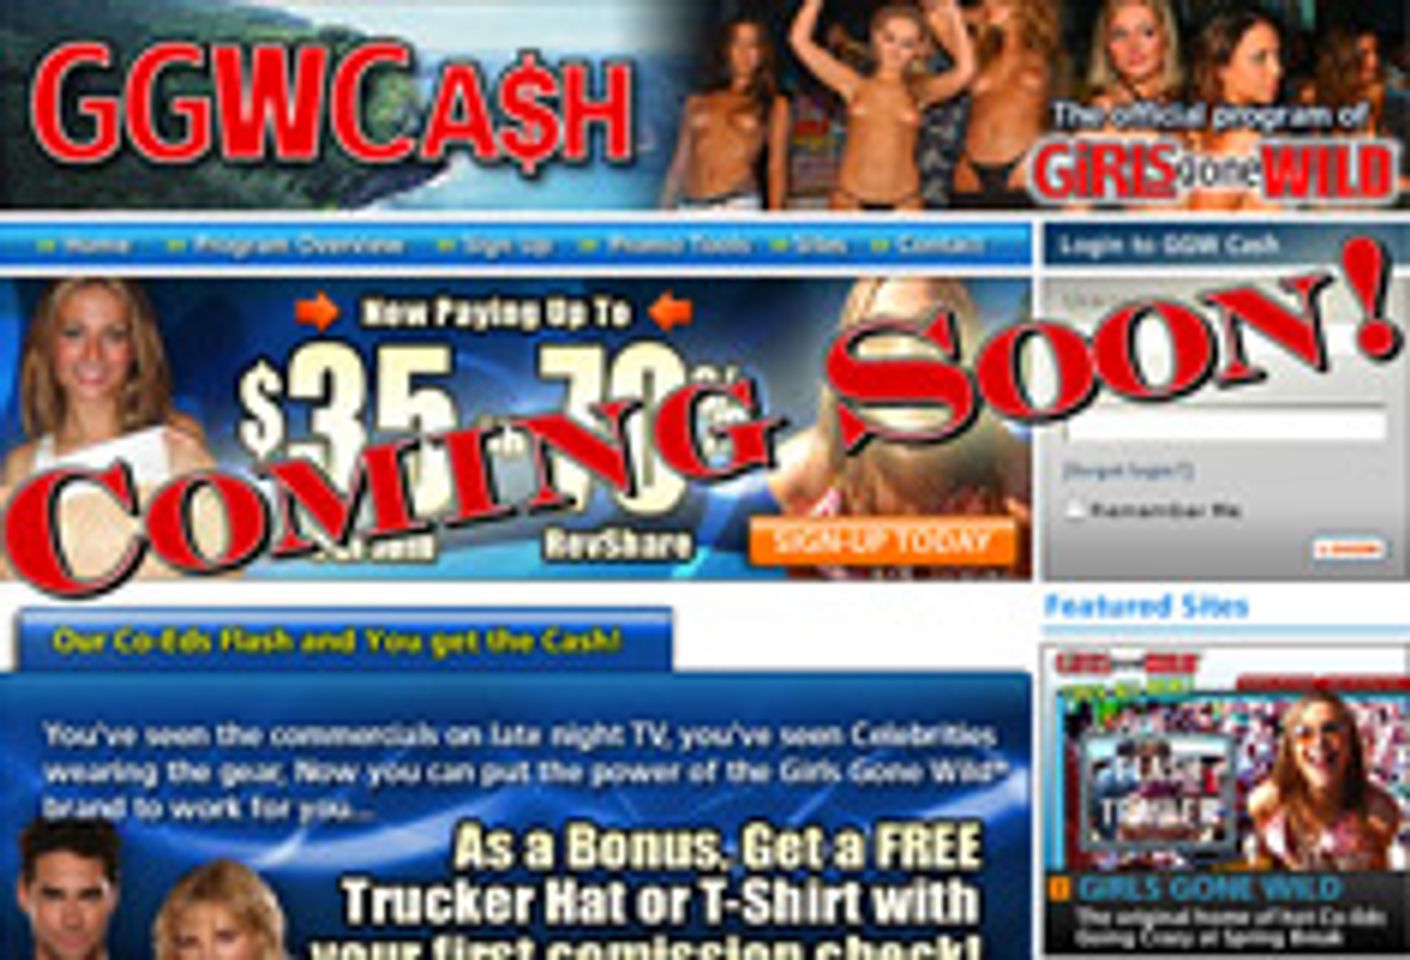 Girls Gone Wild Launches GGWCash